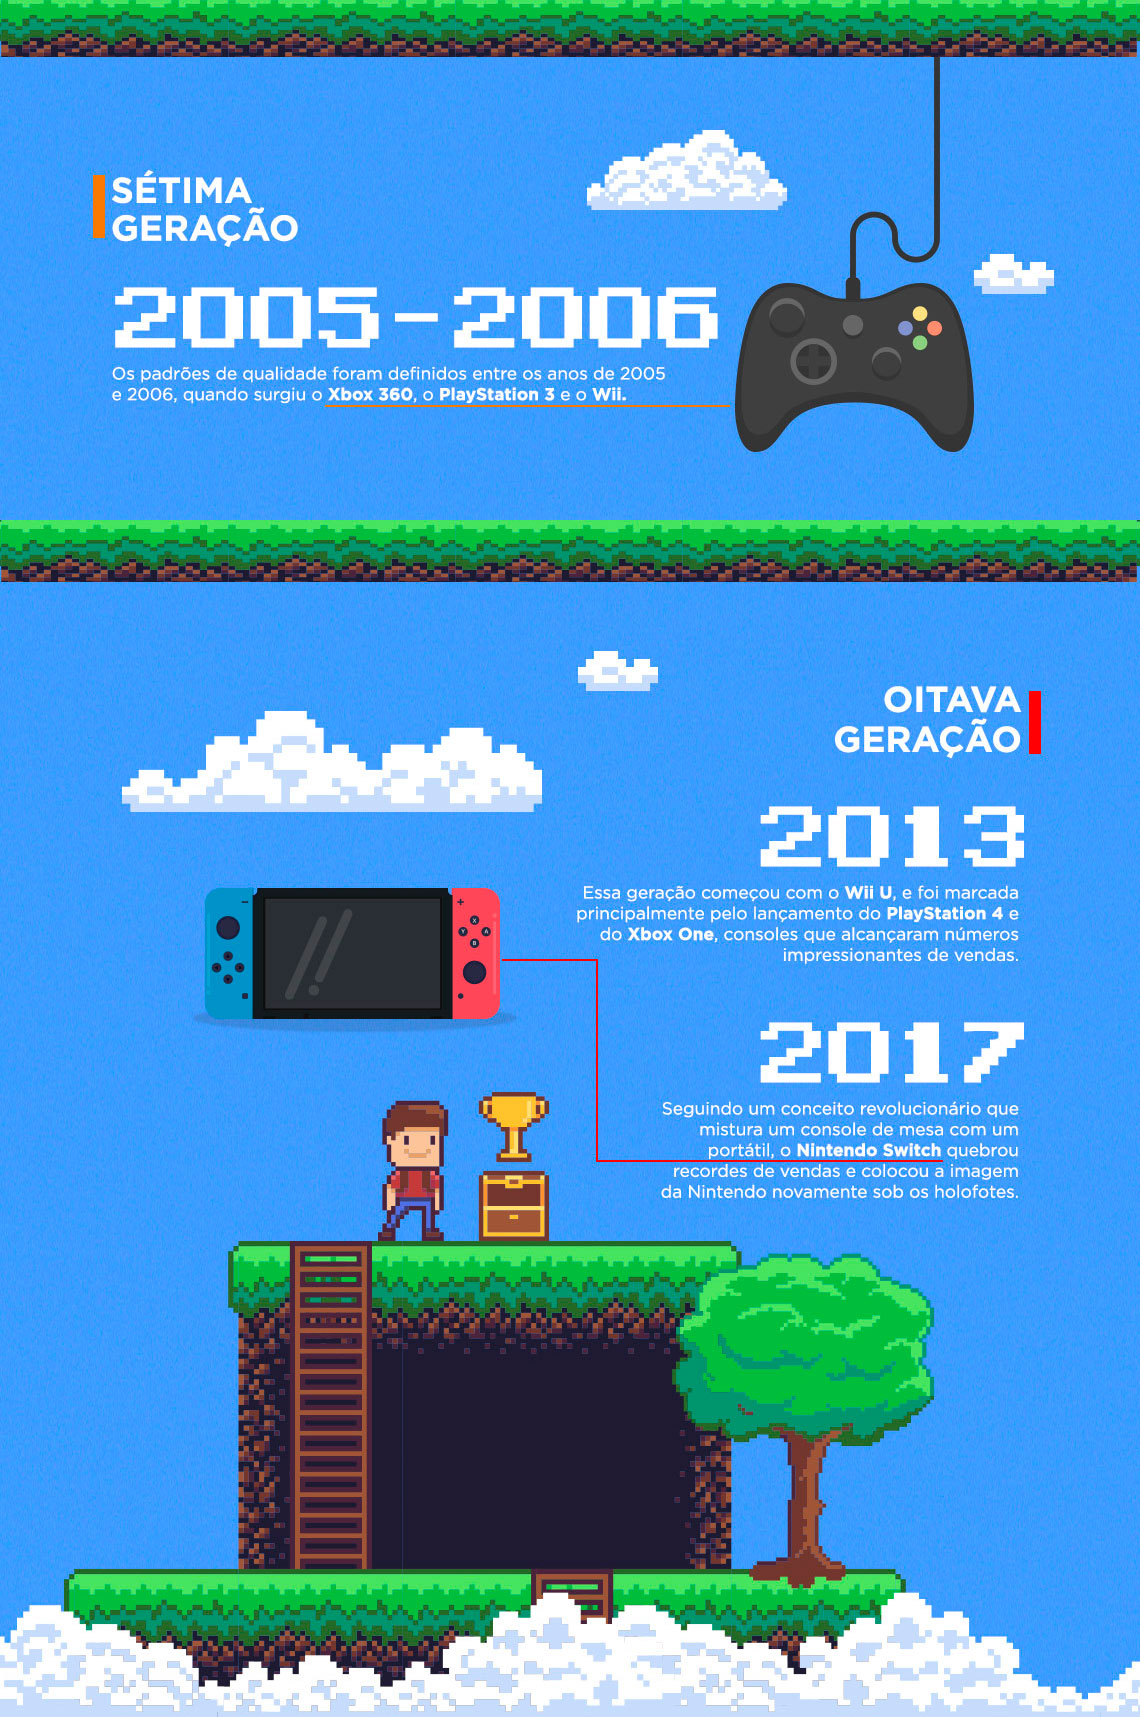 Història do video game